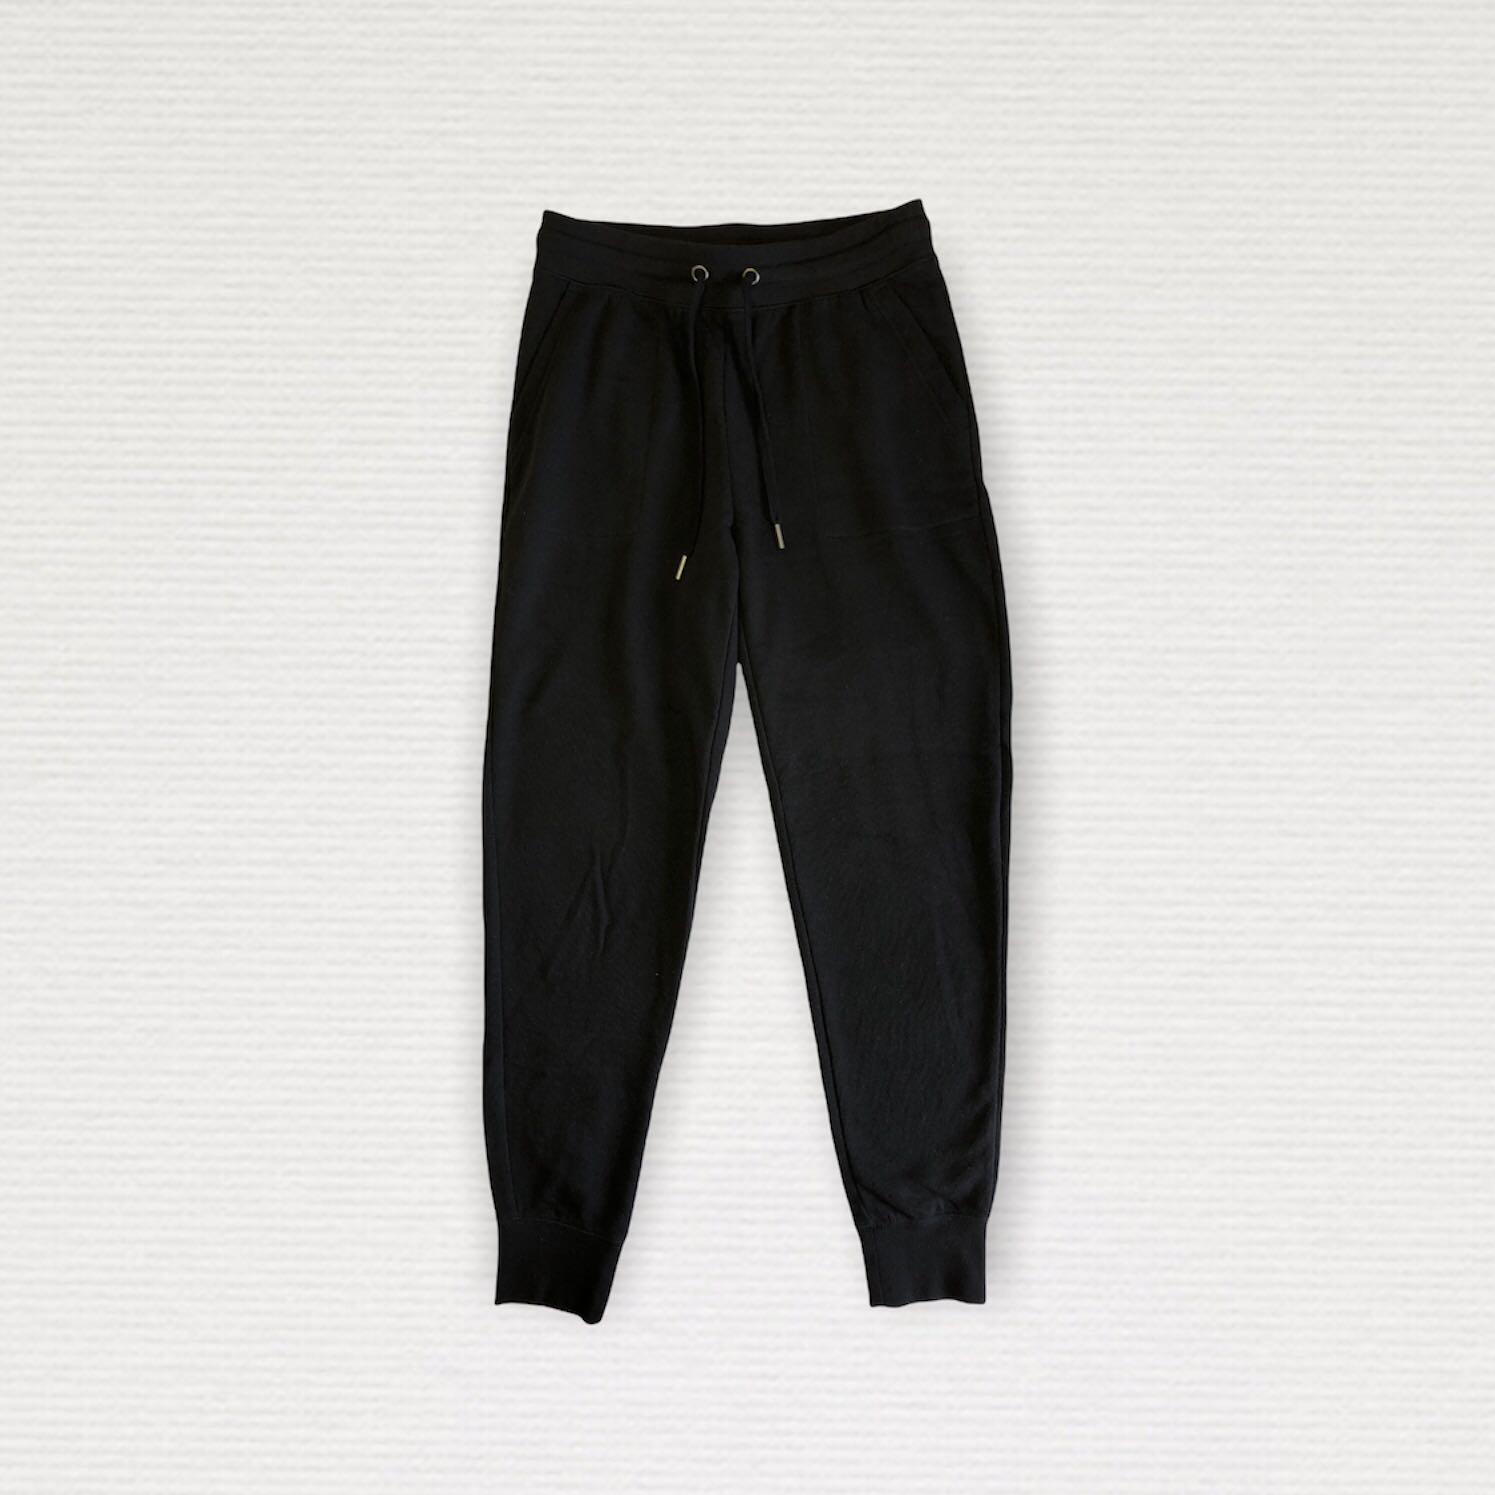 Uniqlo Black Sweatpants, Women's Fashion, Bottoms, Jeans